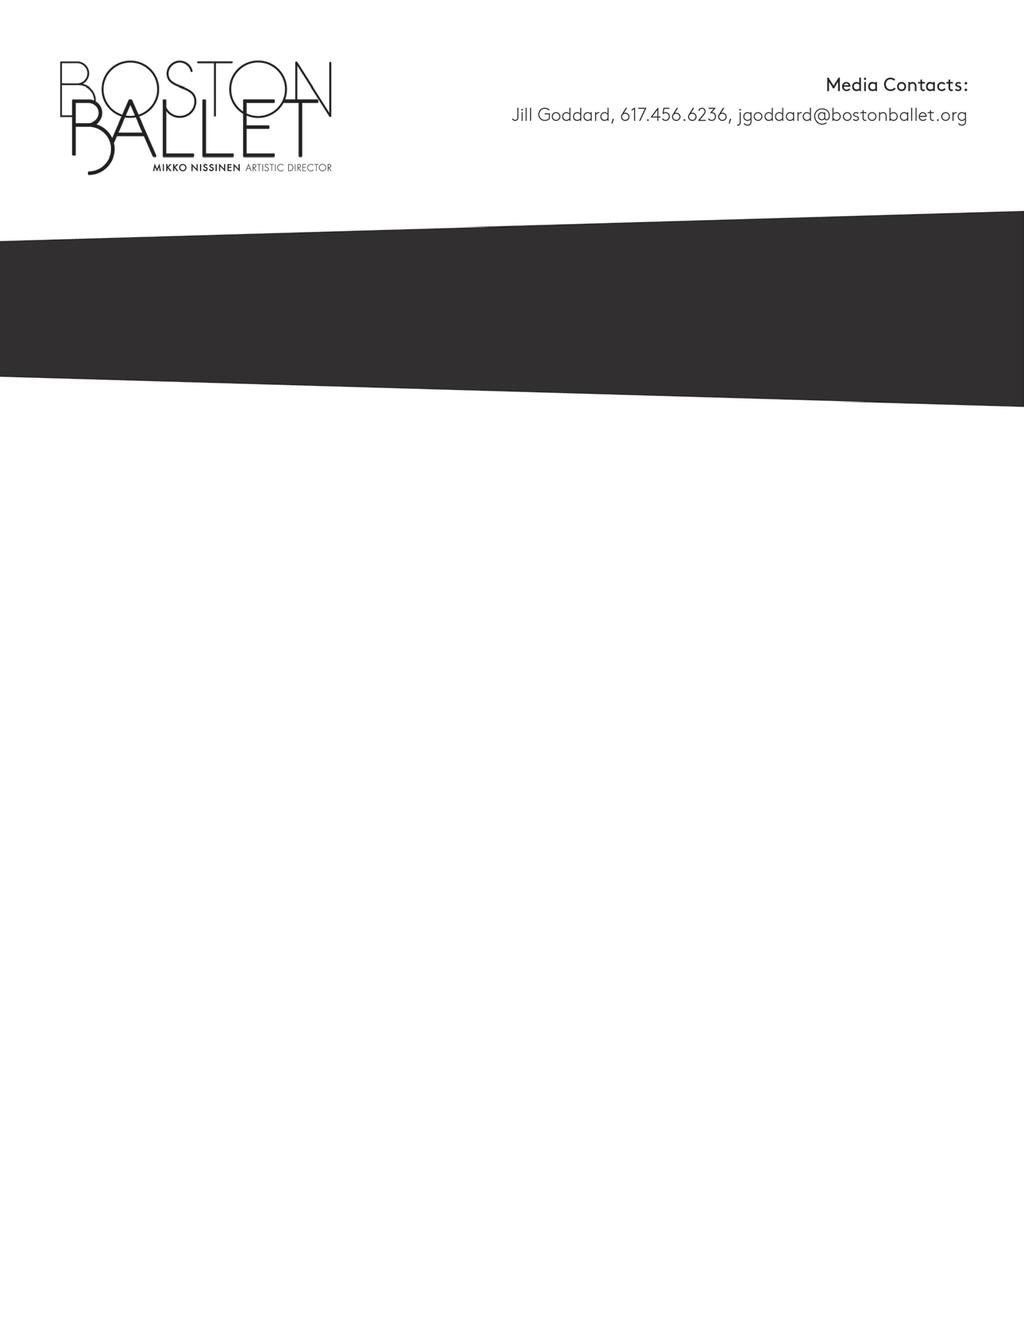 La Sylphide May 24 Jun 10, 2018 Program Background Bournonville Divertissements Choreography: August Bournonville Lighting Design: John Cuff Pas de deux from Flower Festival in Genzano Music: Edvard